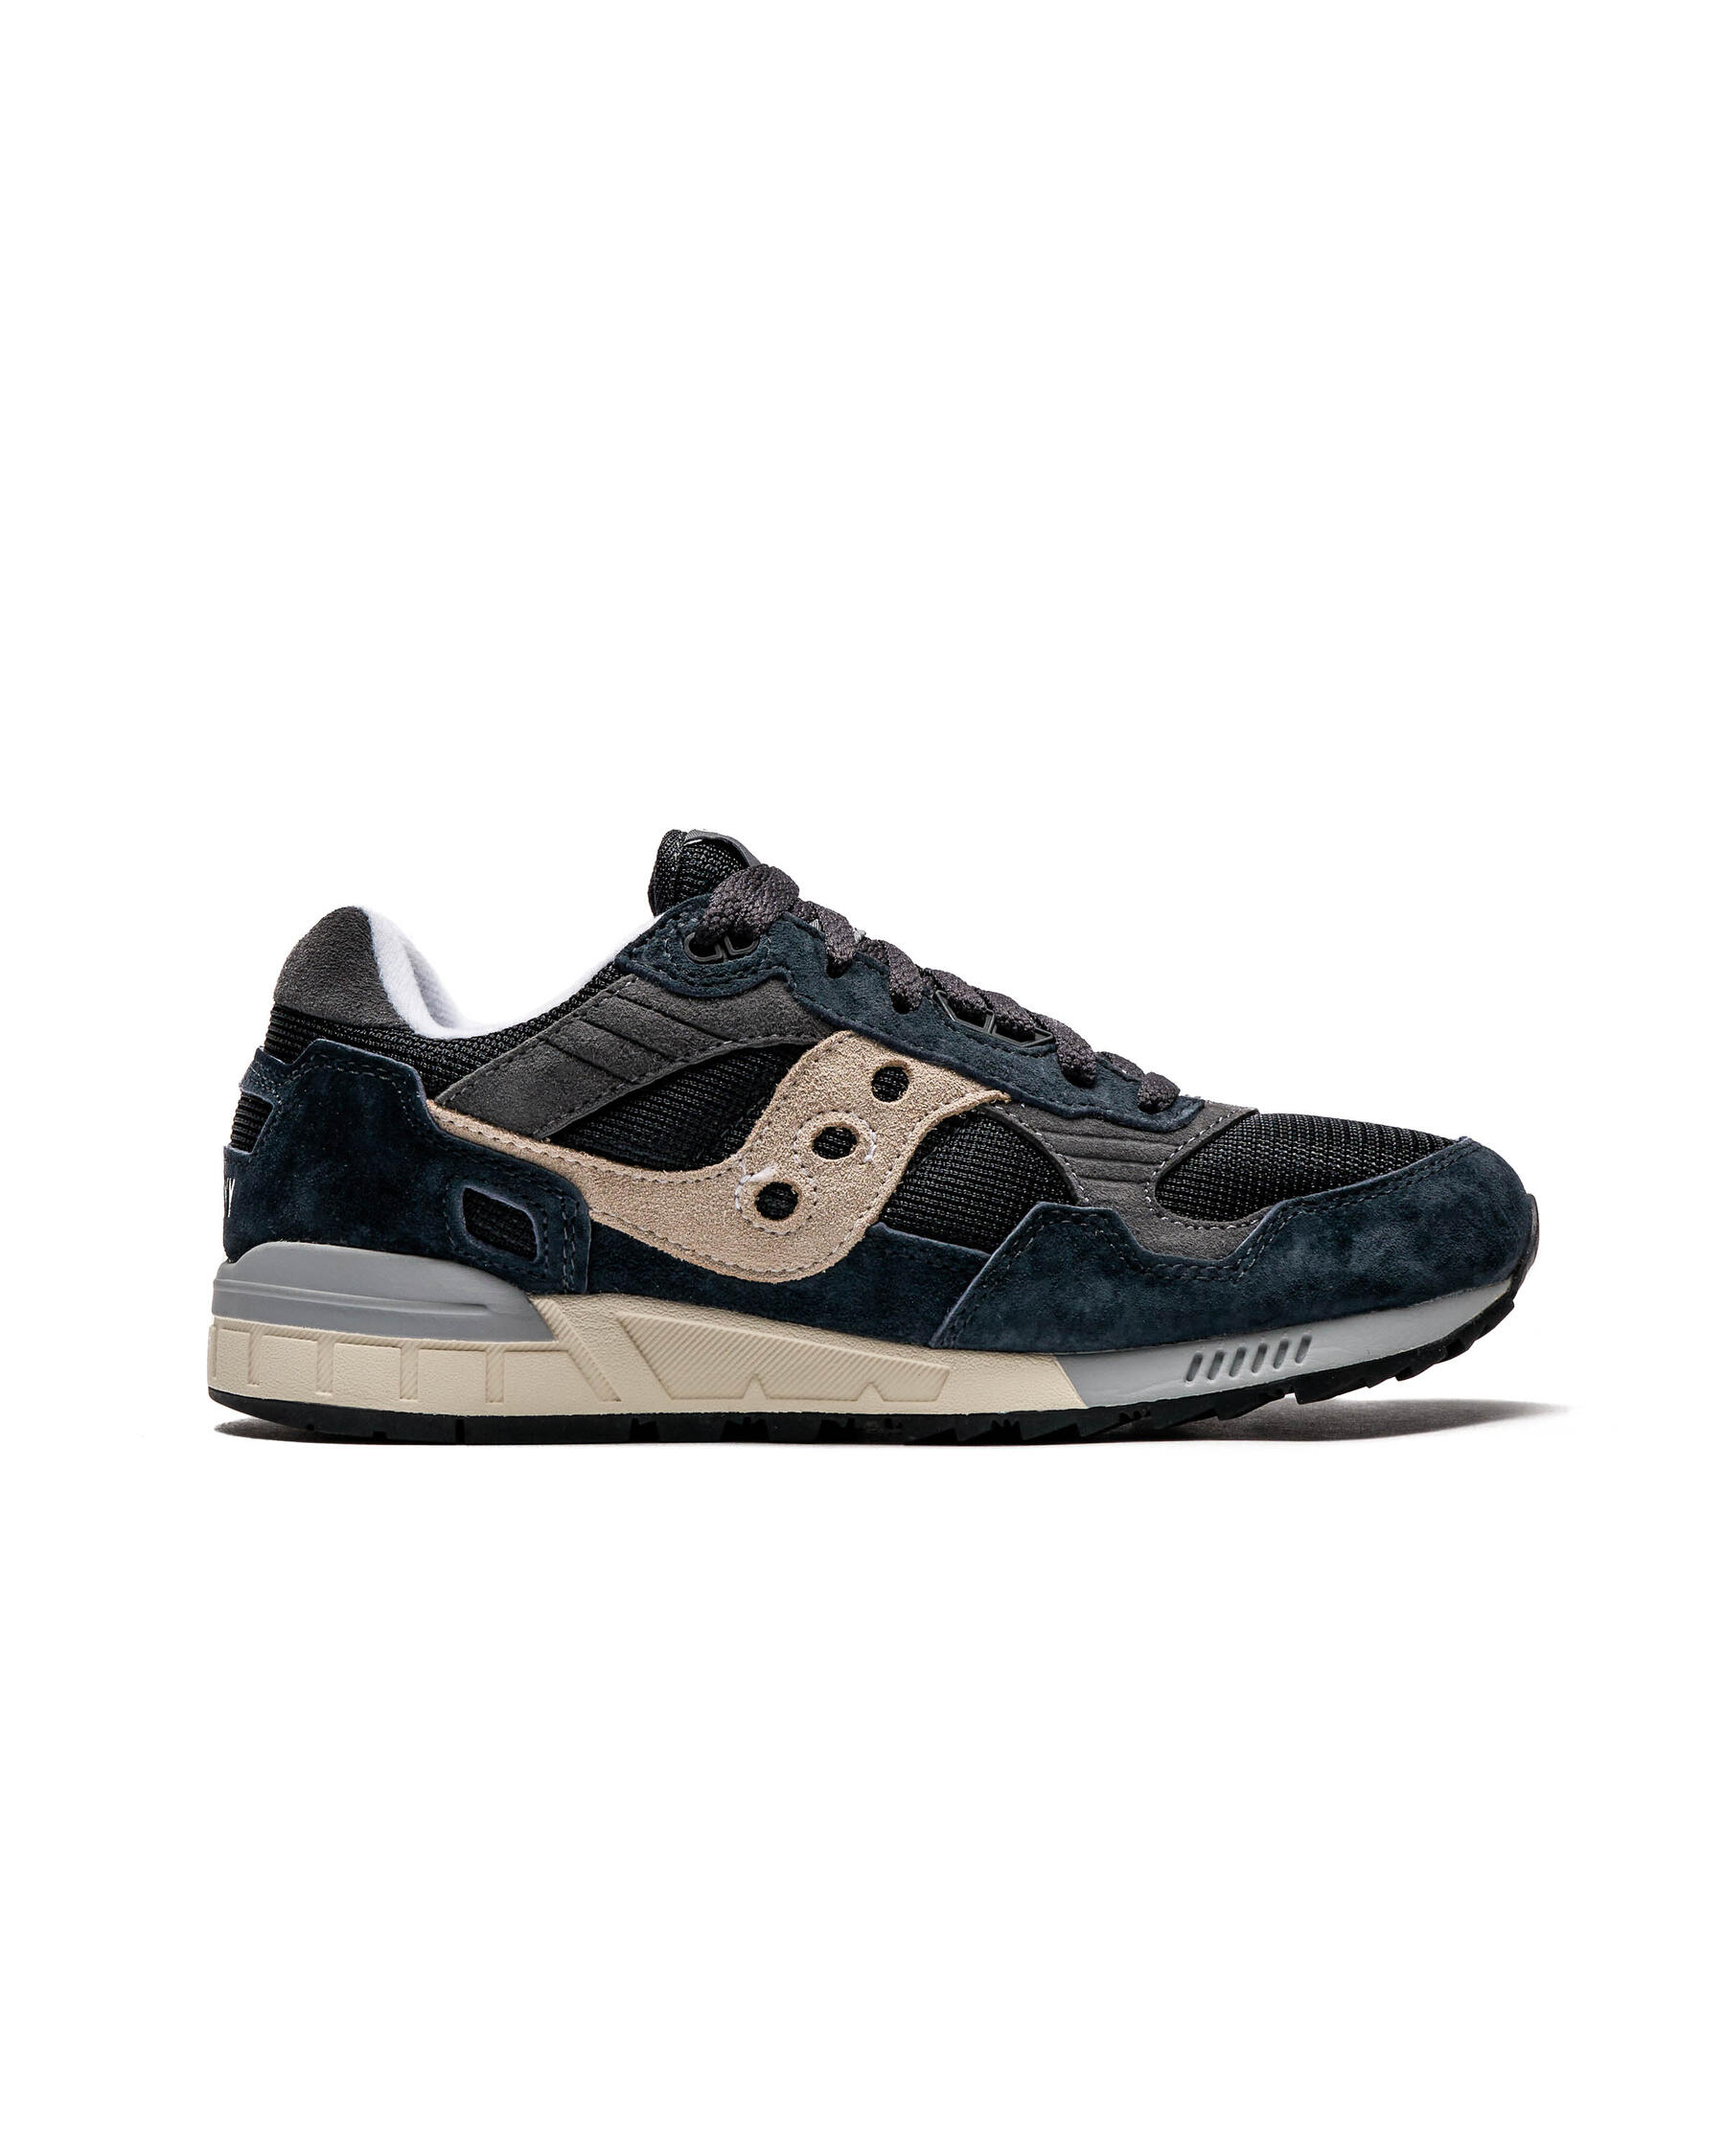 saucony-shadow-5000-navy-grey-s70665-24-footwear _ sneaker-packshots-0